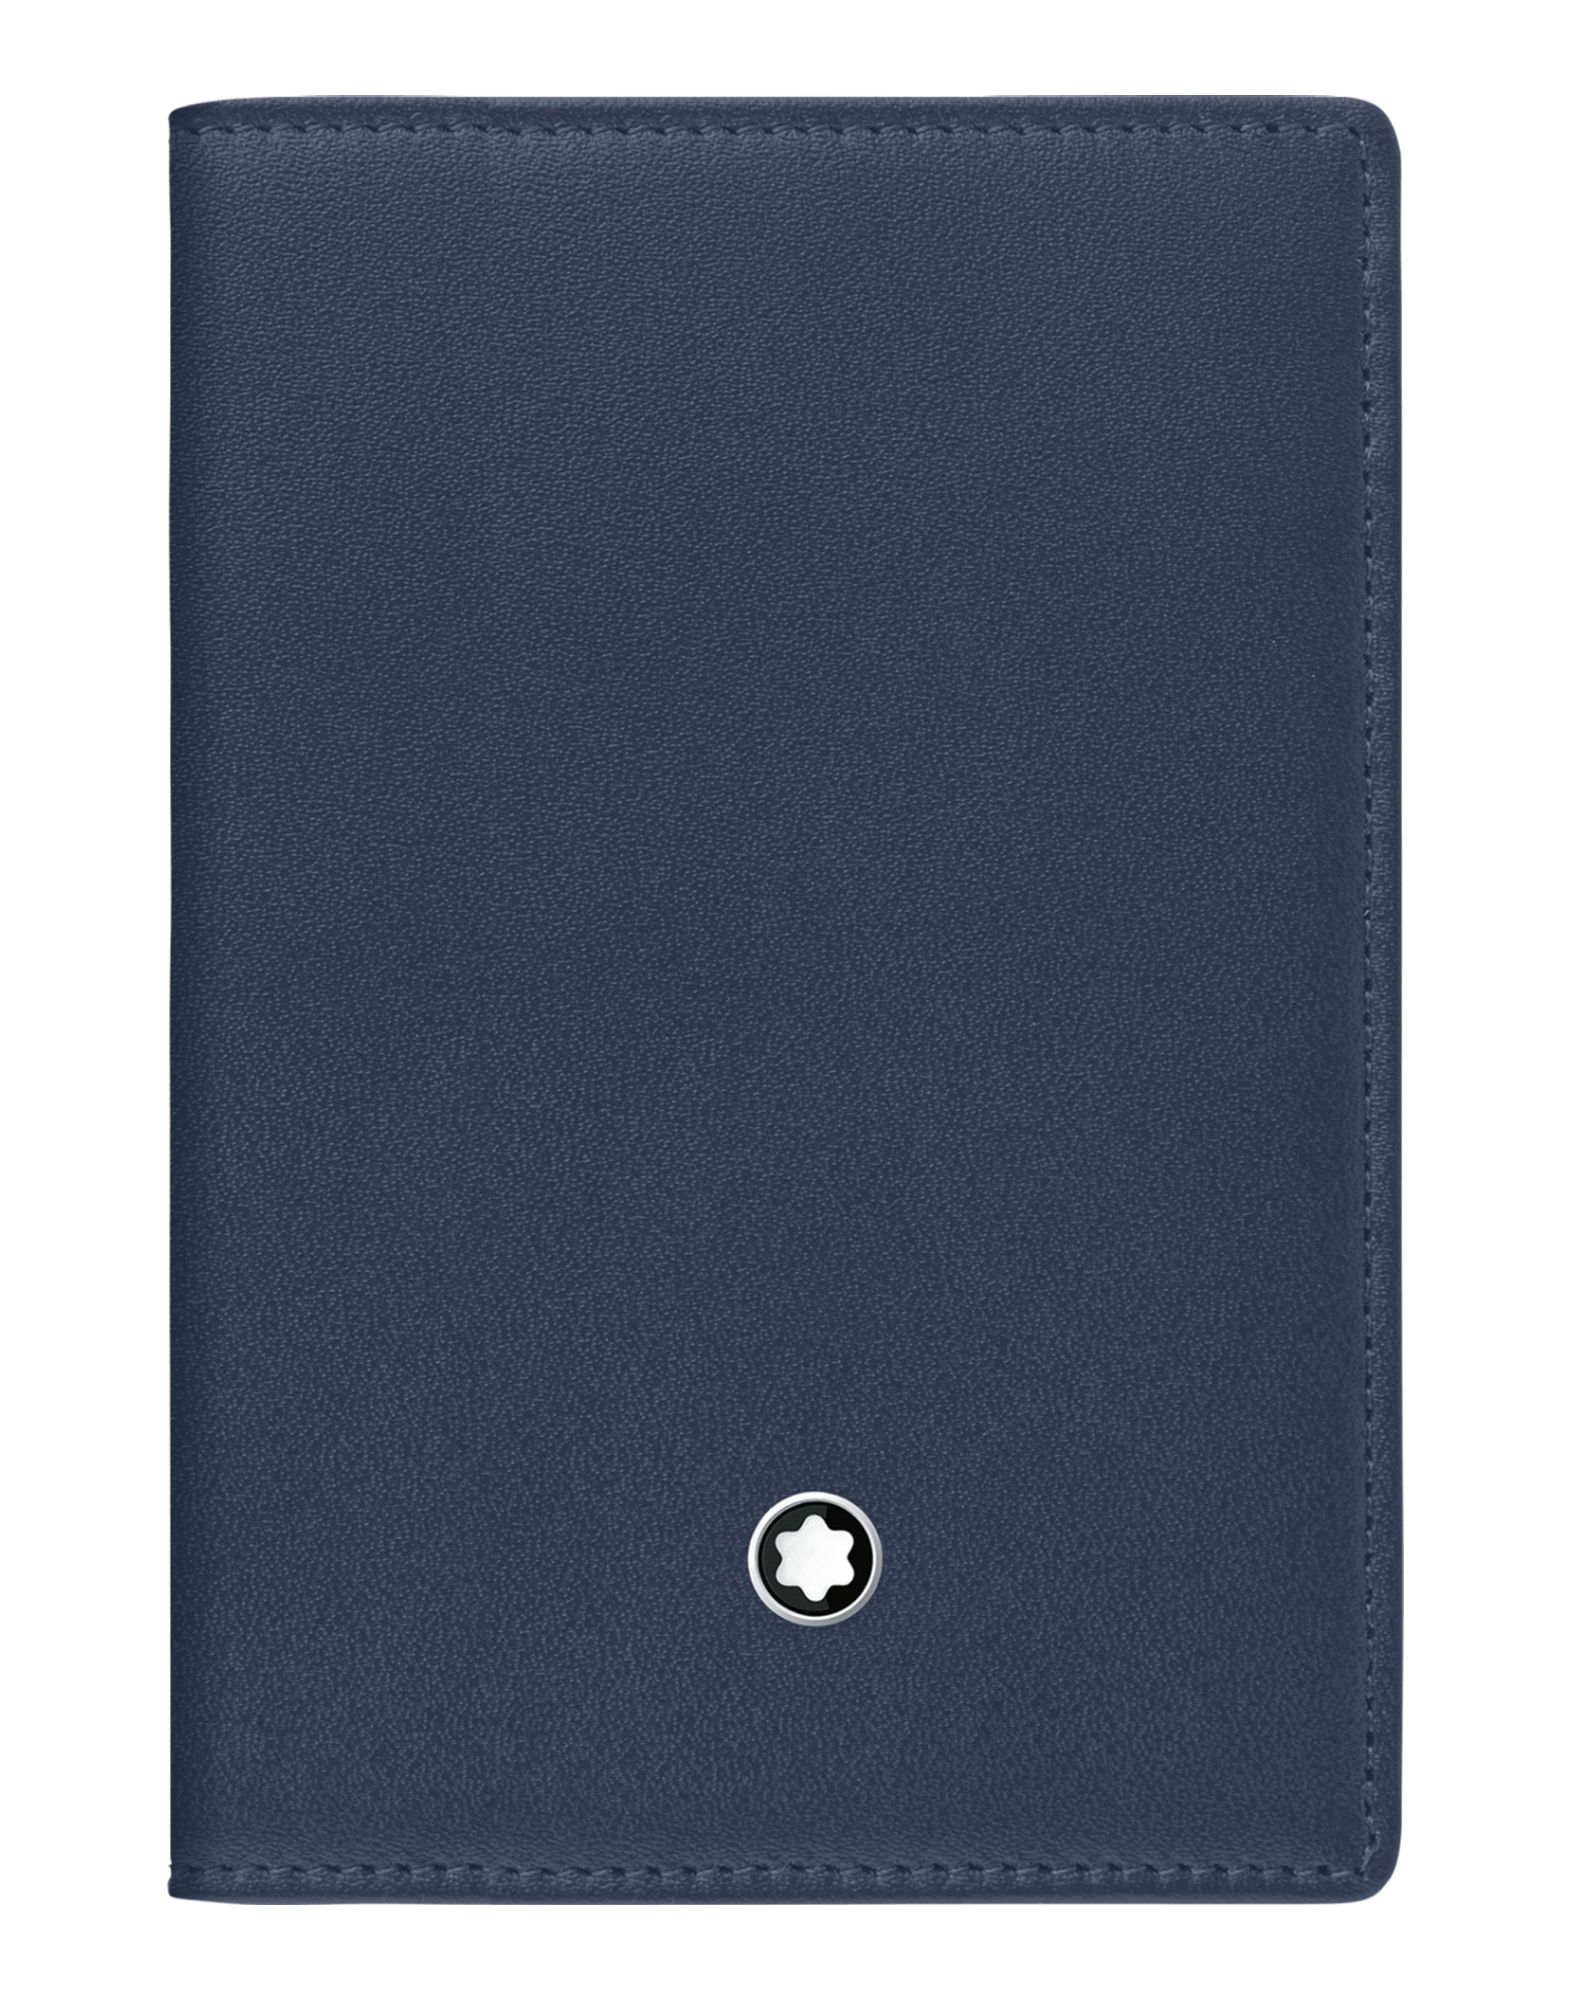 MONTBLANC MONTBLANC BUSINESS CARD HOLDER DOCUMENT HOLDER BLUE SIZE - COWHIDE,46486741UA 1